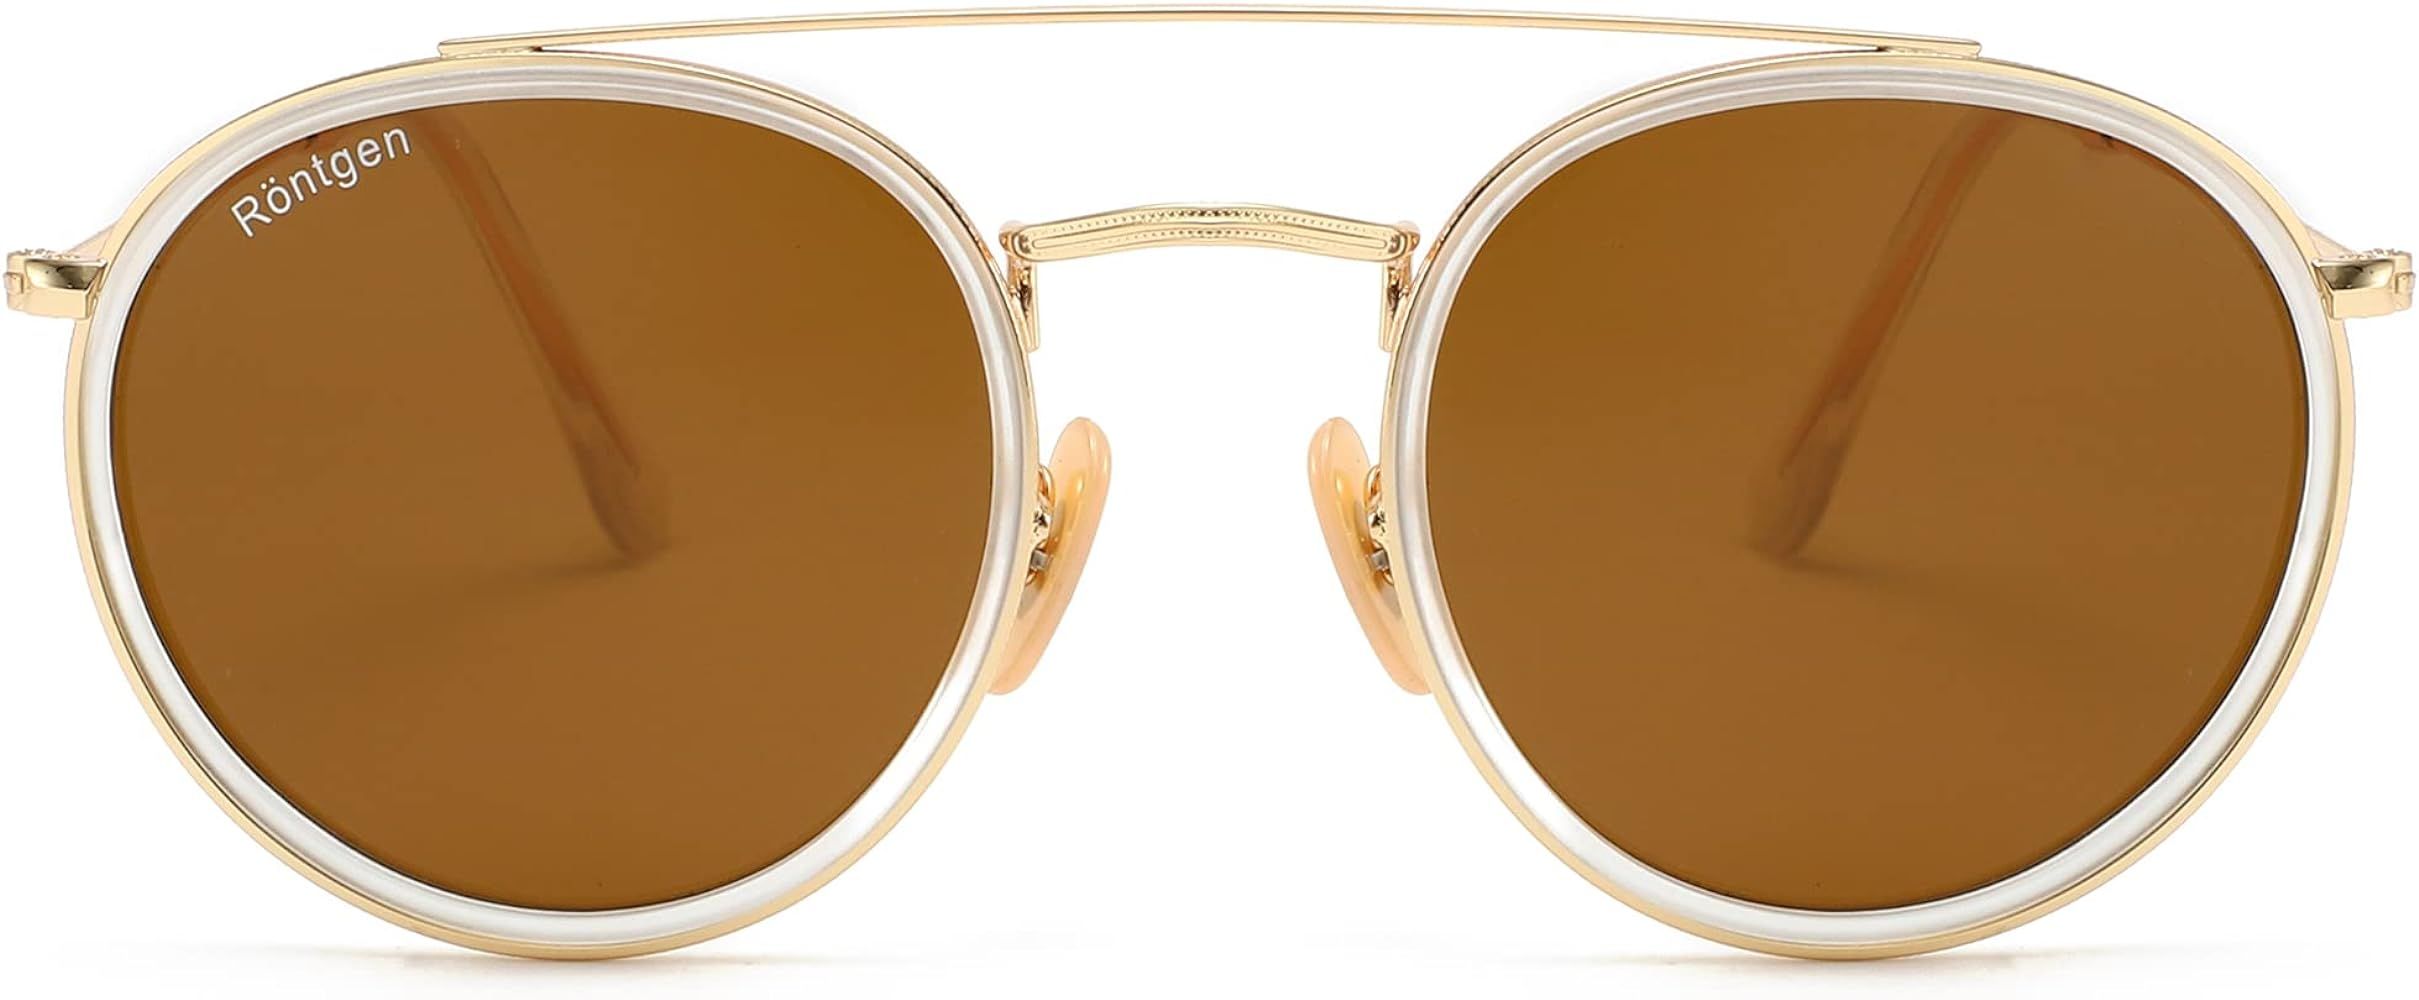 CONRAD RONTGEN Retro Round Sunglasses for Women Men Double Bridge UV400 Protection | Amazon (US)